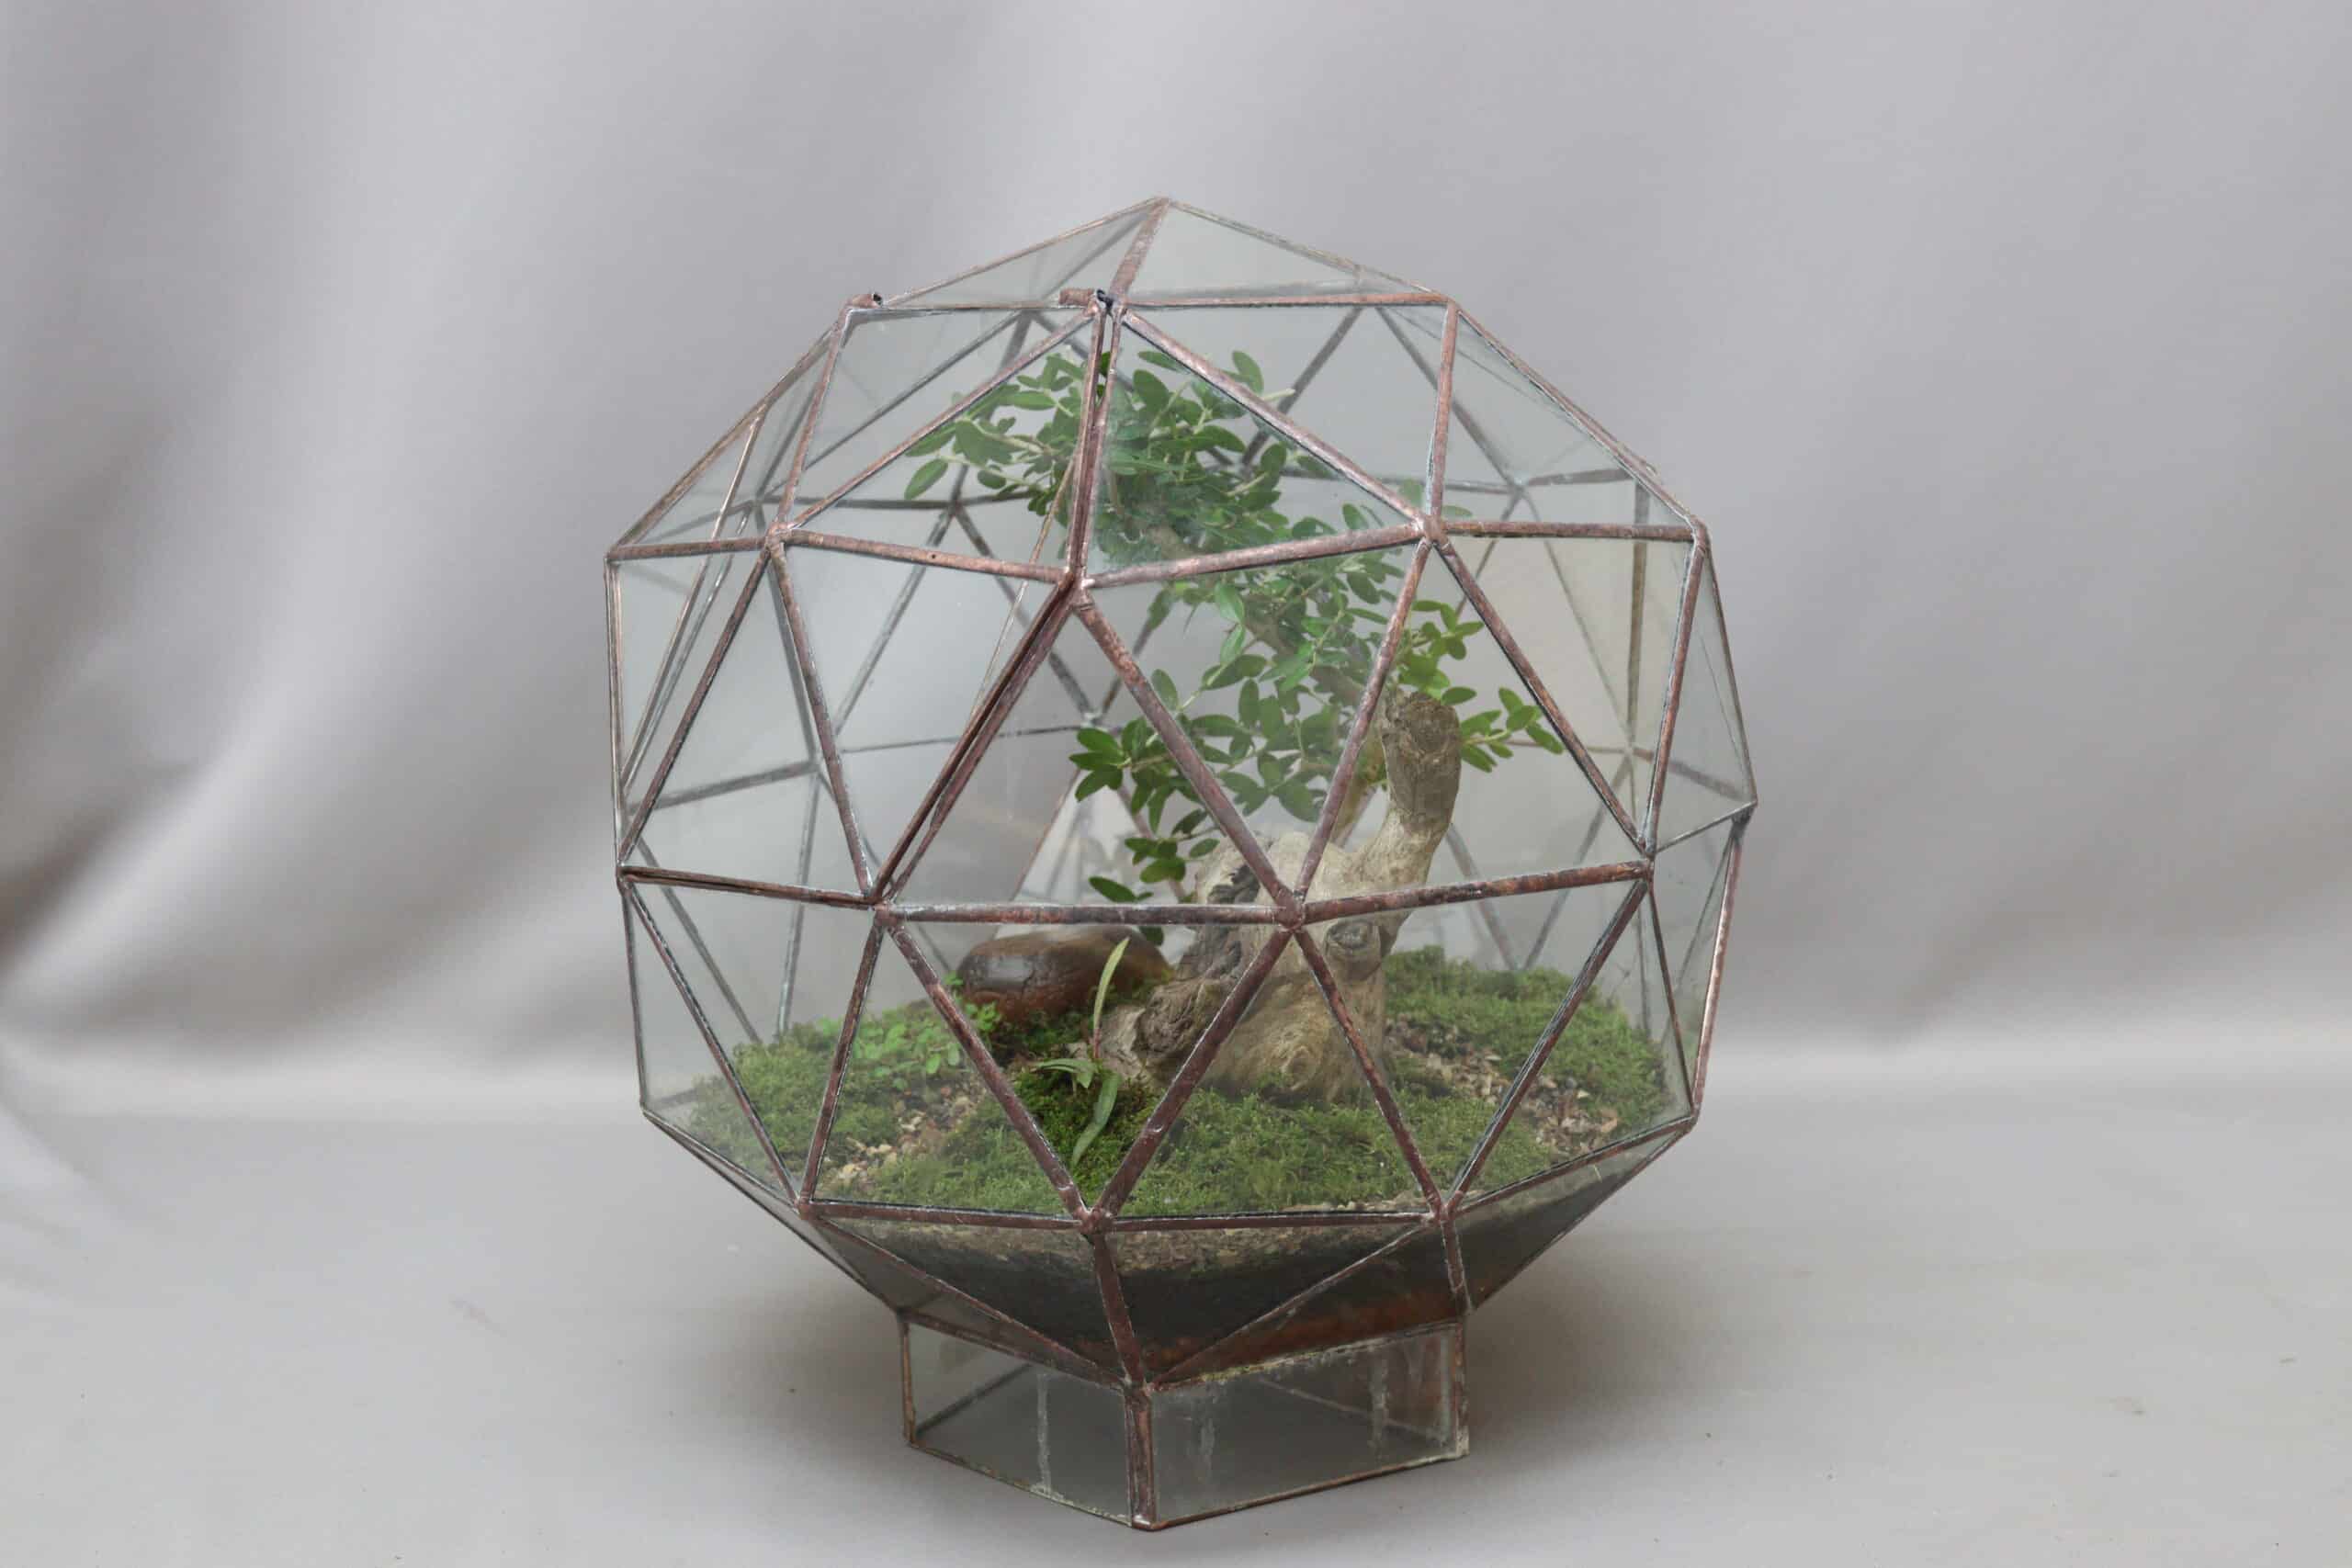 A geometric glass terrarium planter with a bonsai inside, against a plain grey background.